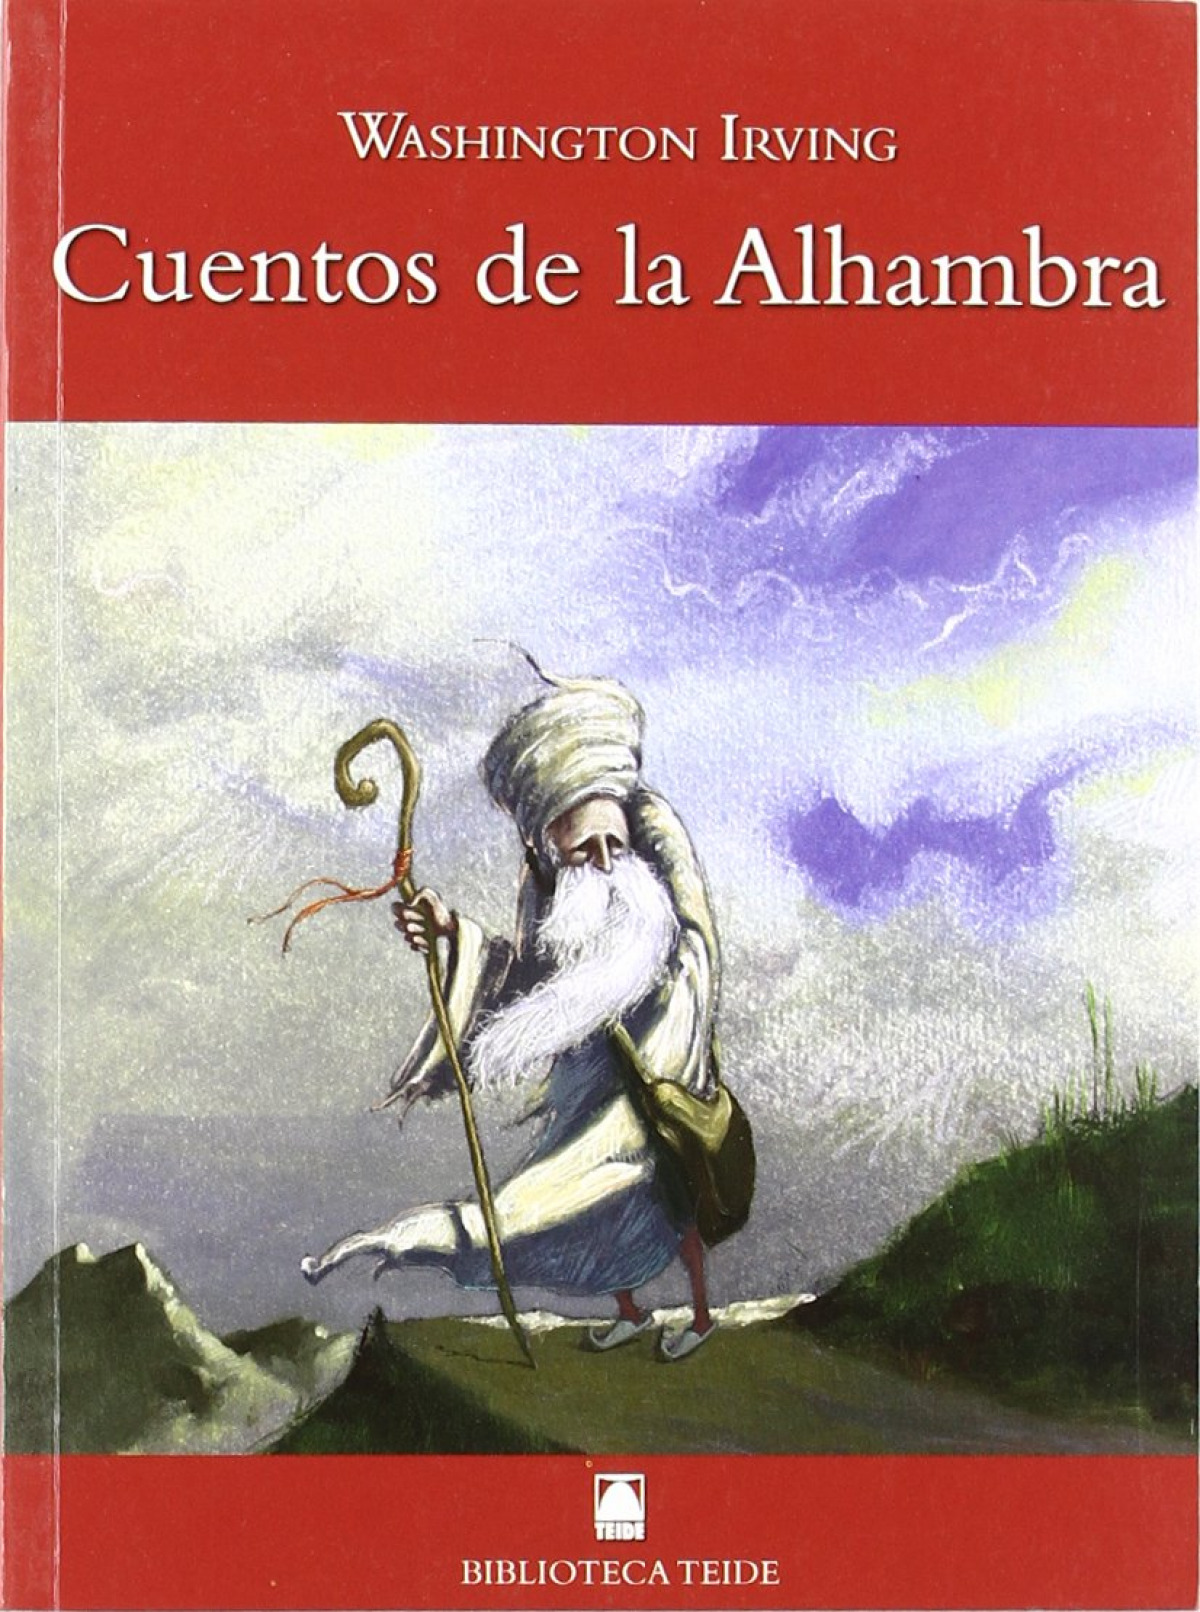 Biblioteca Teide 043 - Cuentos de la Alhambra -W. Irving- - Joan Baptista FORTUNY GINE/Salvador MARTÍ RAÜLL